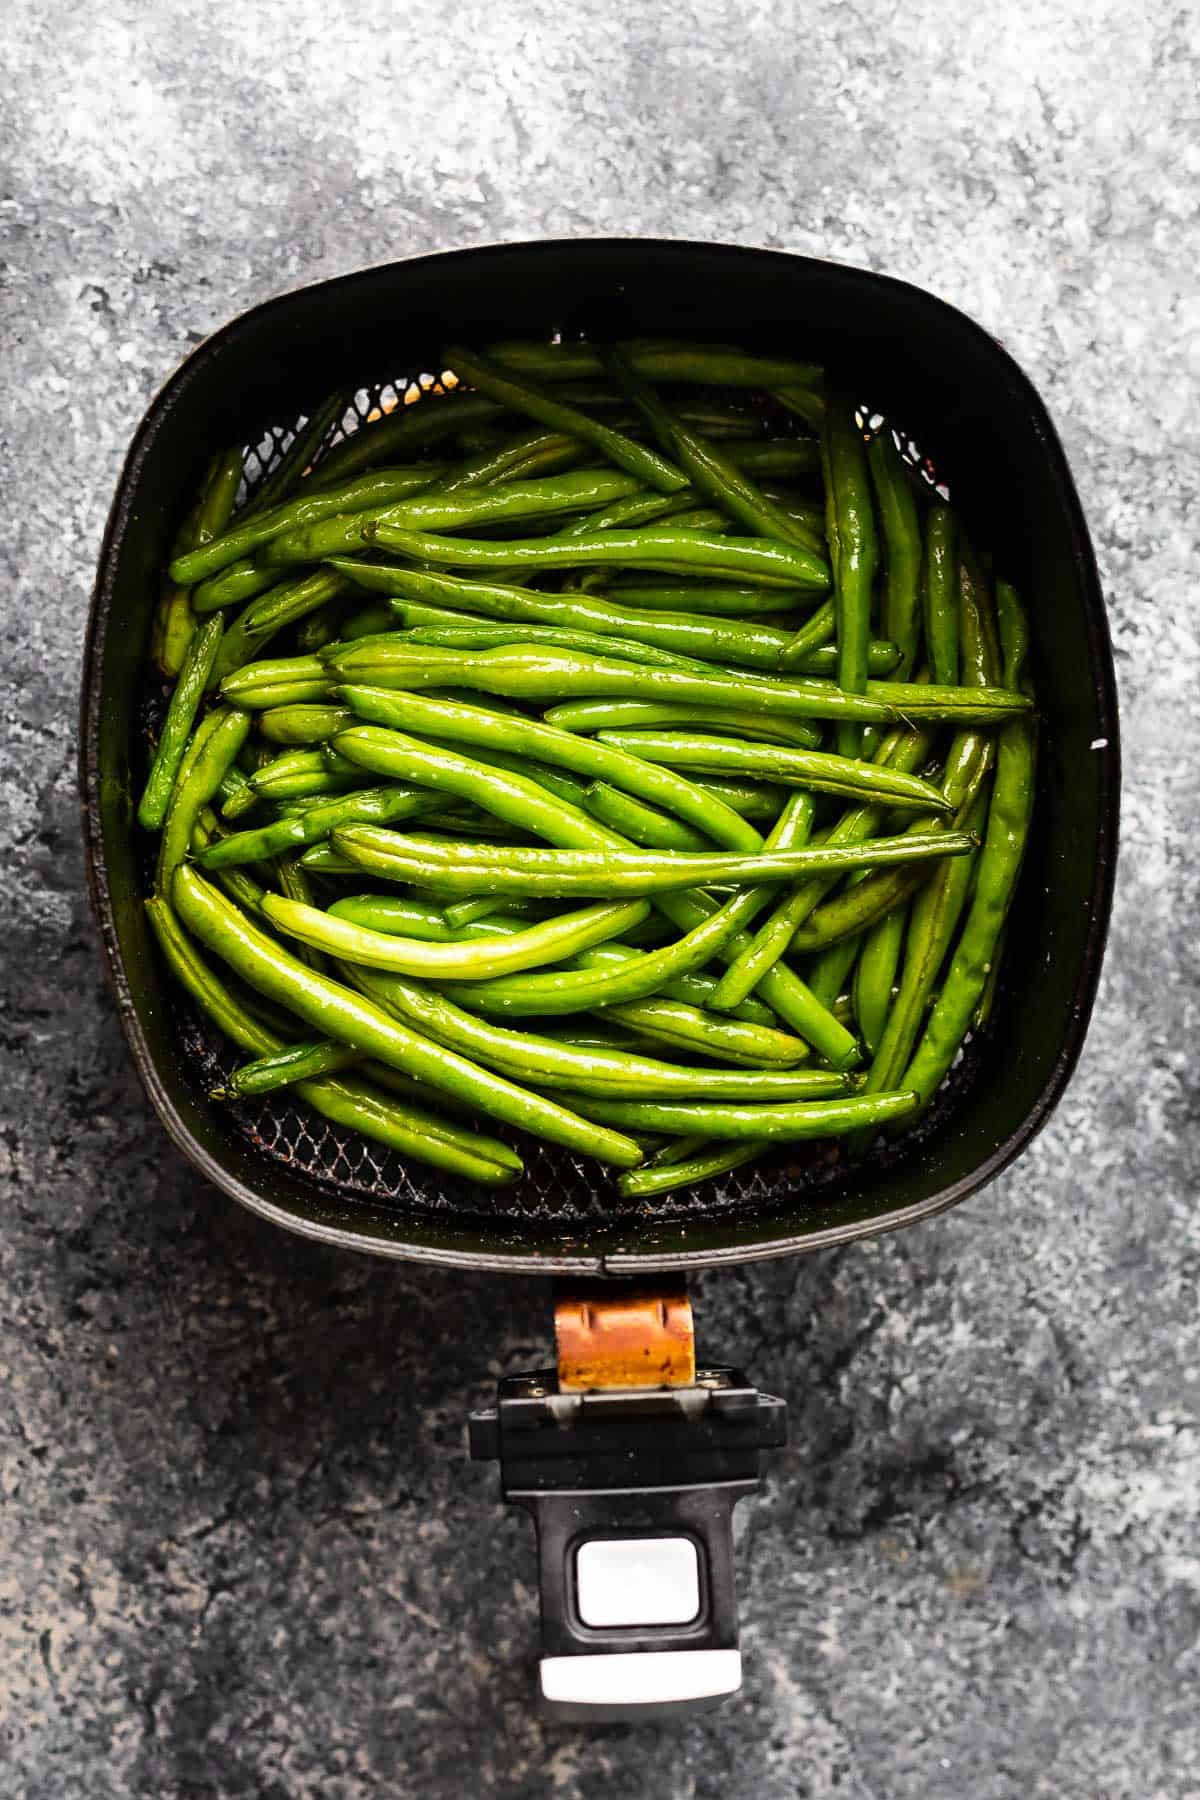 Air Fryer Frozen Green Beans (simple garlic seasoning)